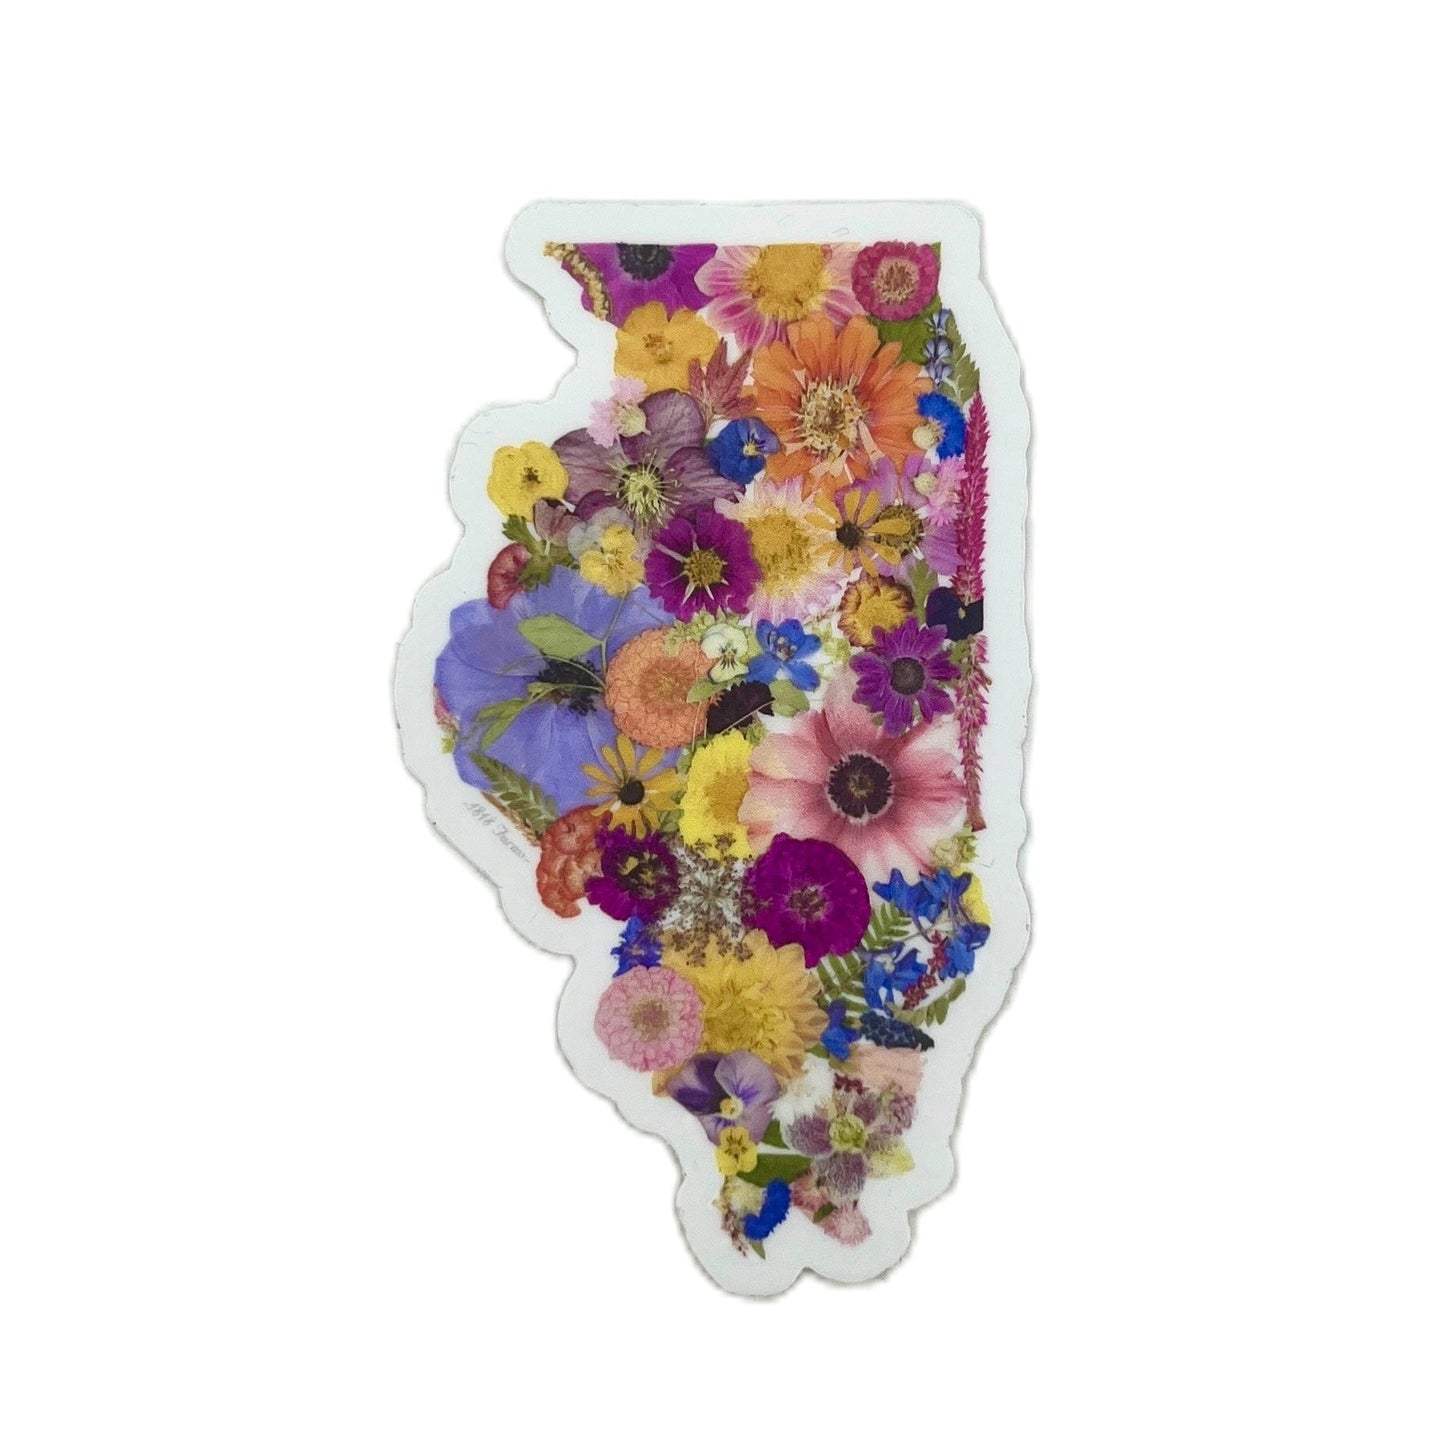 Illinois Themed Vinyl Sticker  - "Where I Bloom" Collection Vinyl Sticker 1818 Farms   